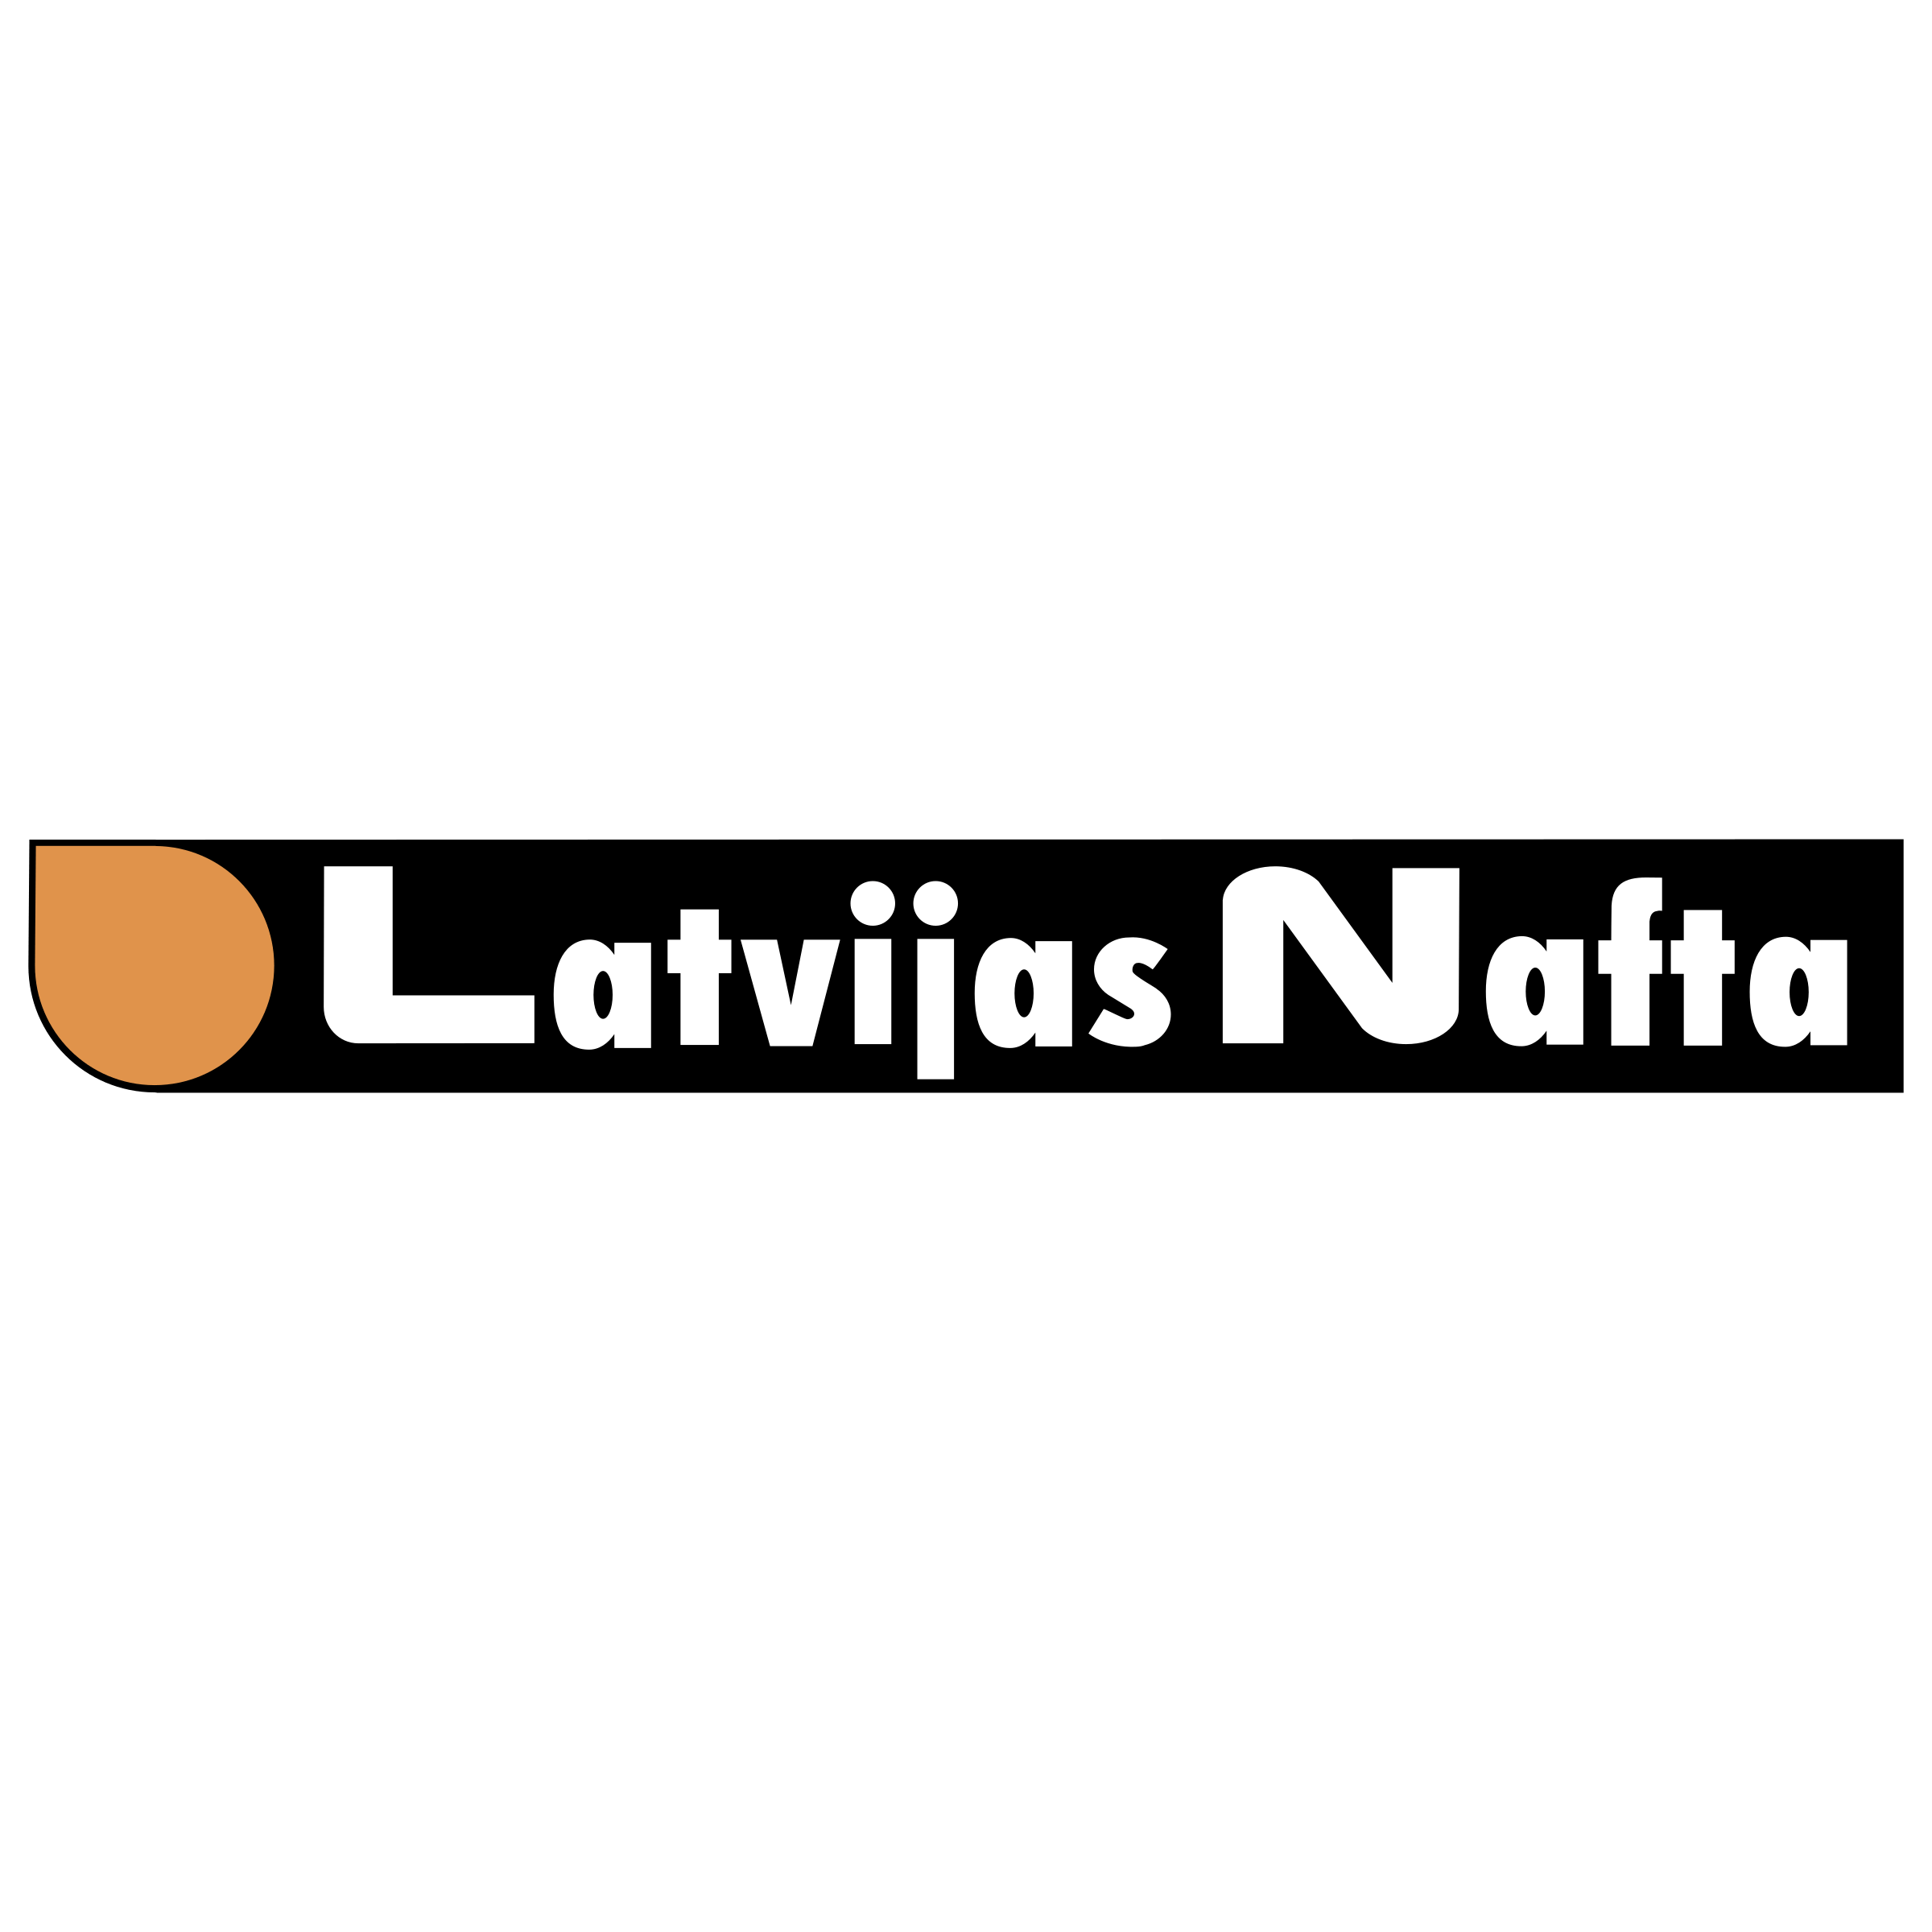 Nafta Logo - Latvijas Nafta Logo PNG Transparent & SVG Vector - Freebie Supply